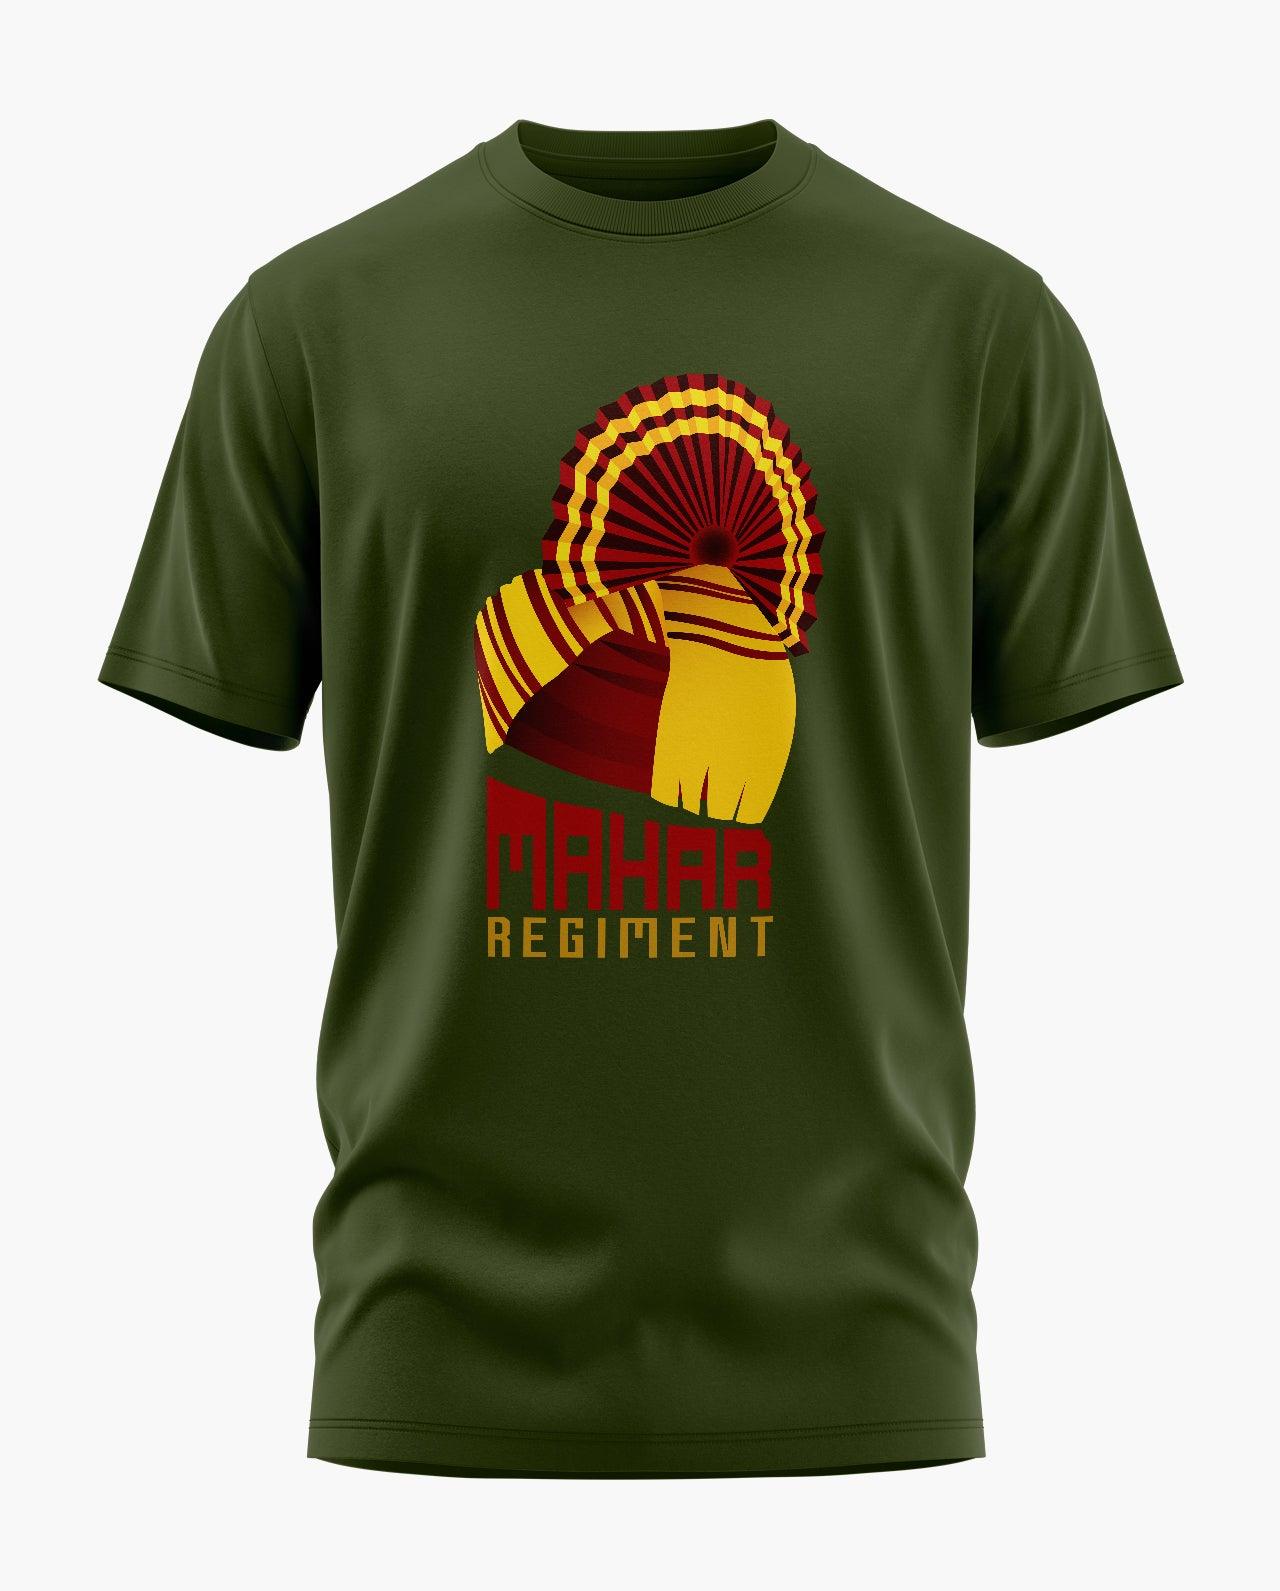 Mahar Regiment T-Shirt - Aero Armour